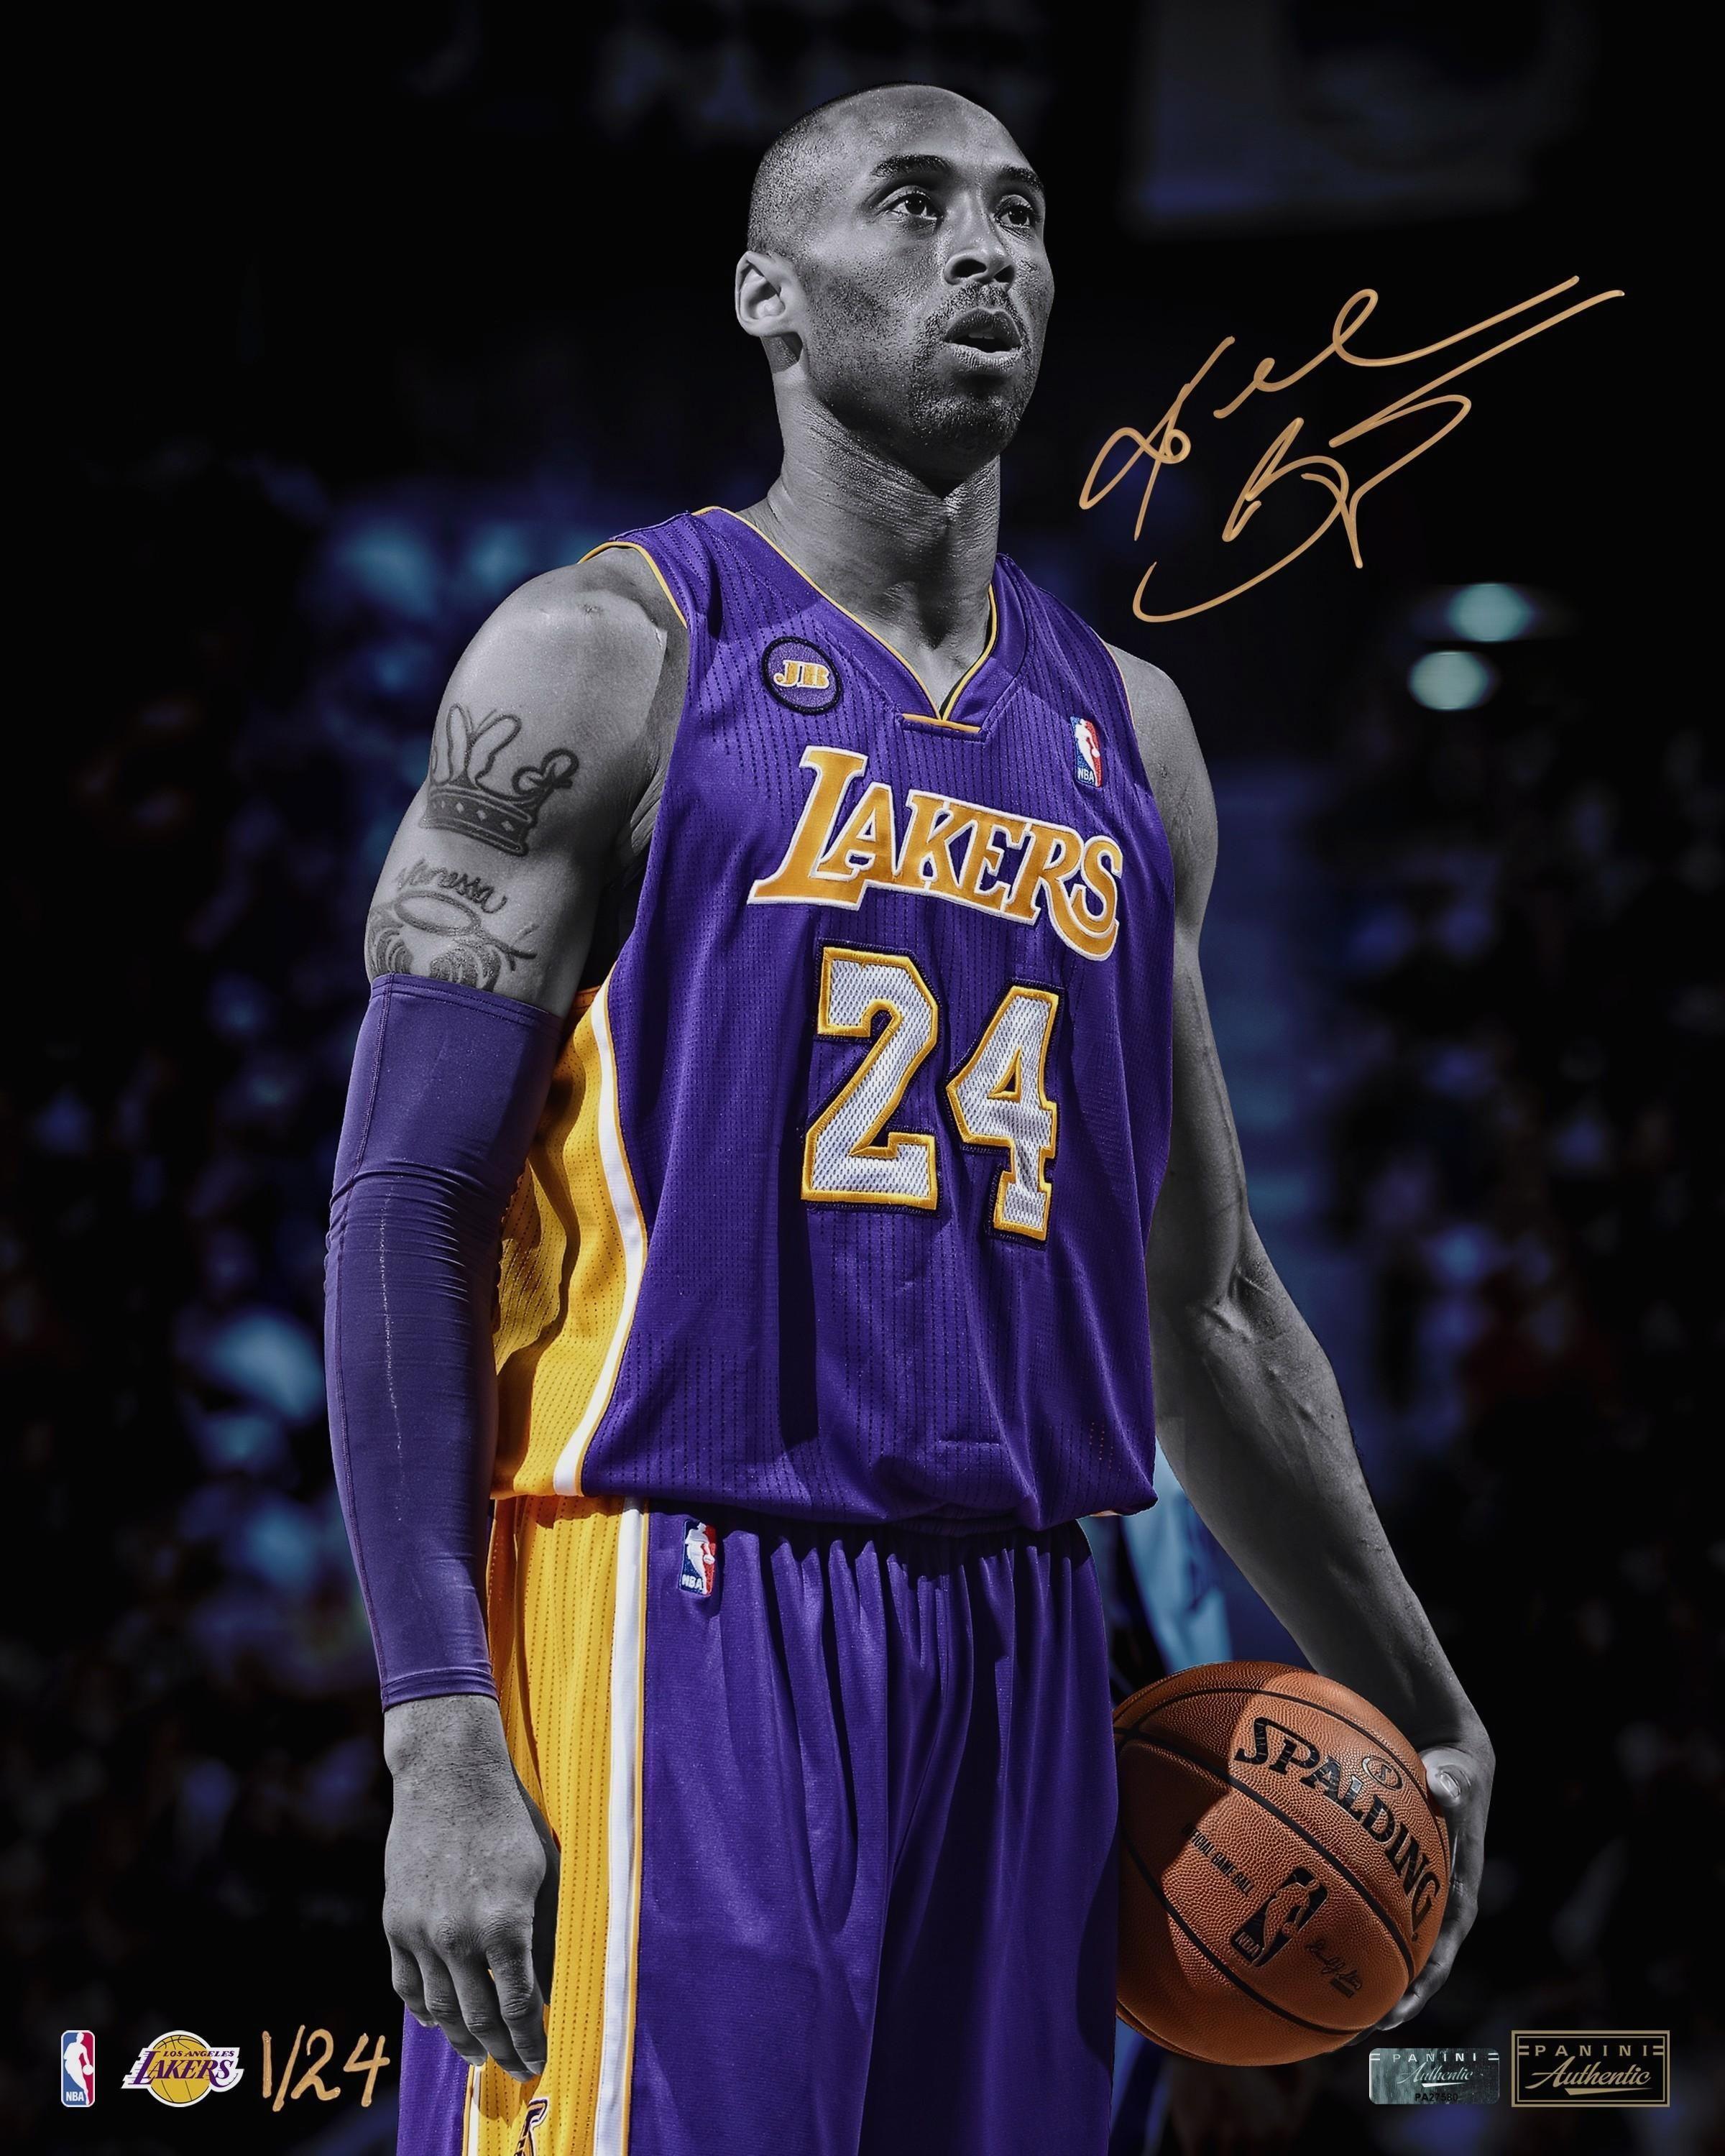 Kobe Bryant, the Lakers' retired basketball player, holding a basketball. - Kobe Bryant